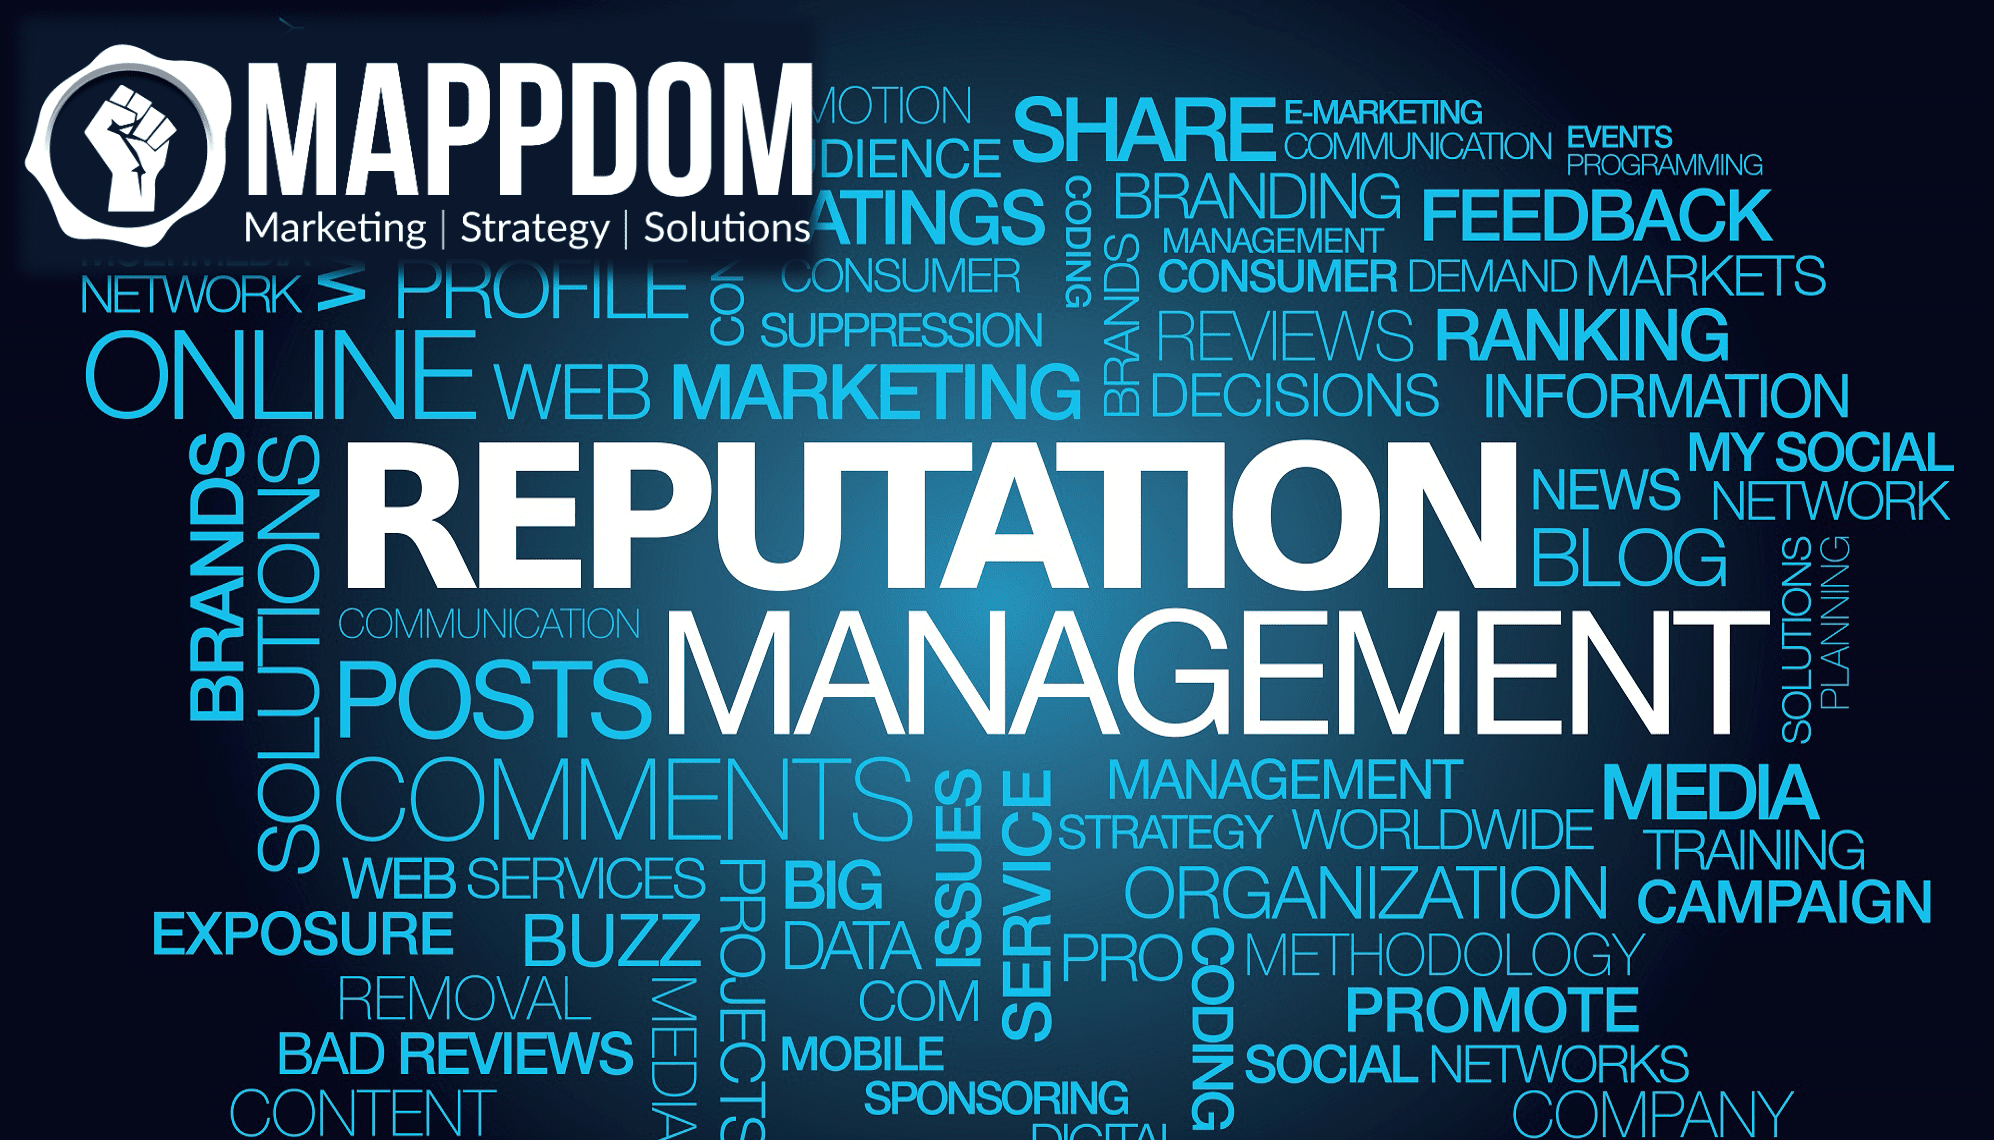 Mappdom Marketing Agency Near Me Reputation Management